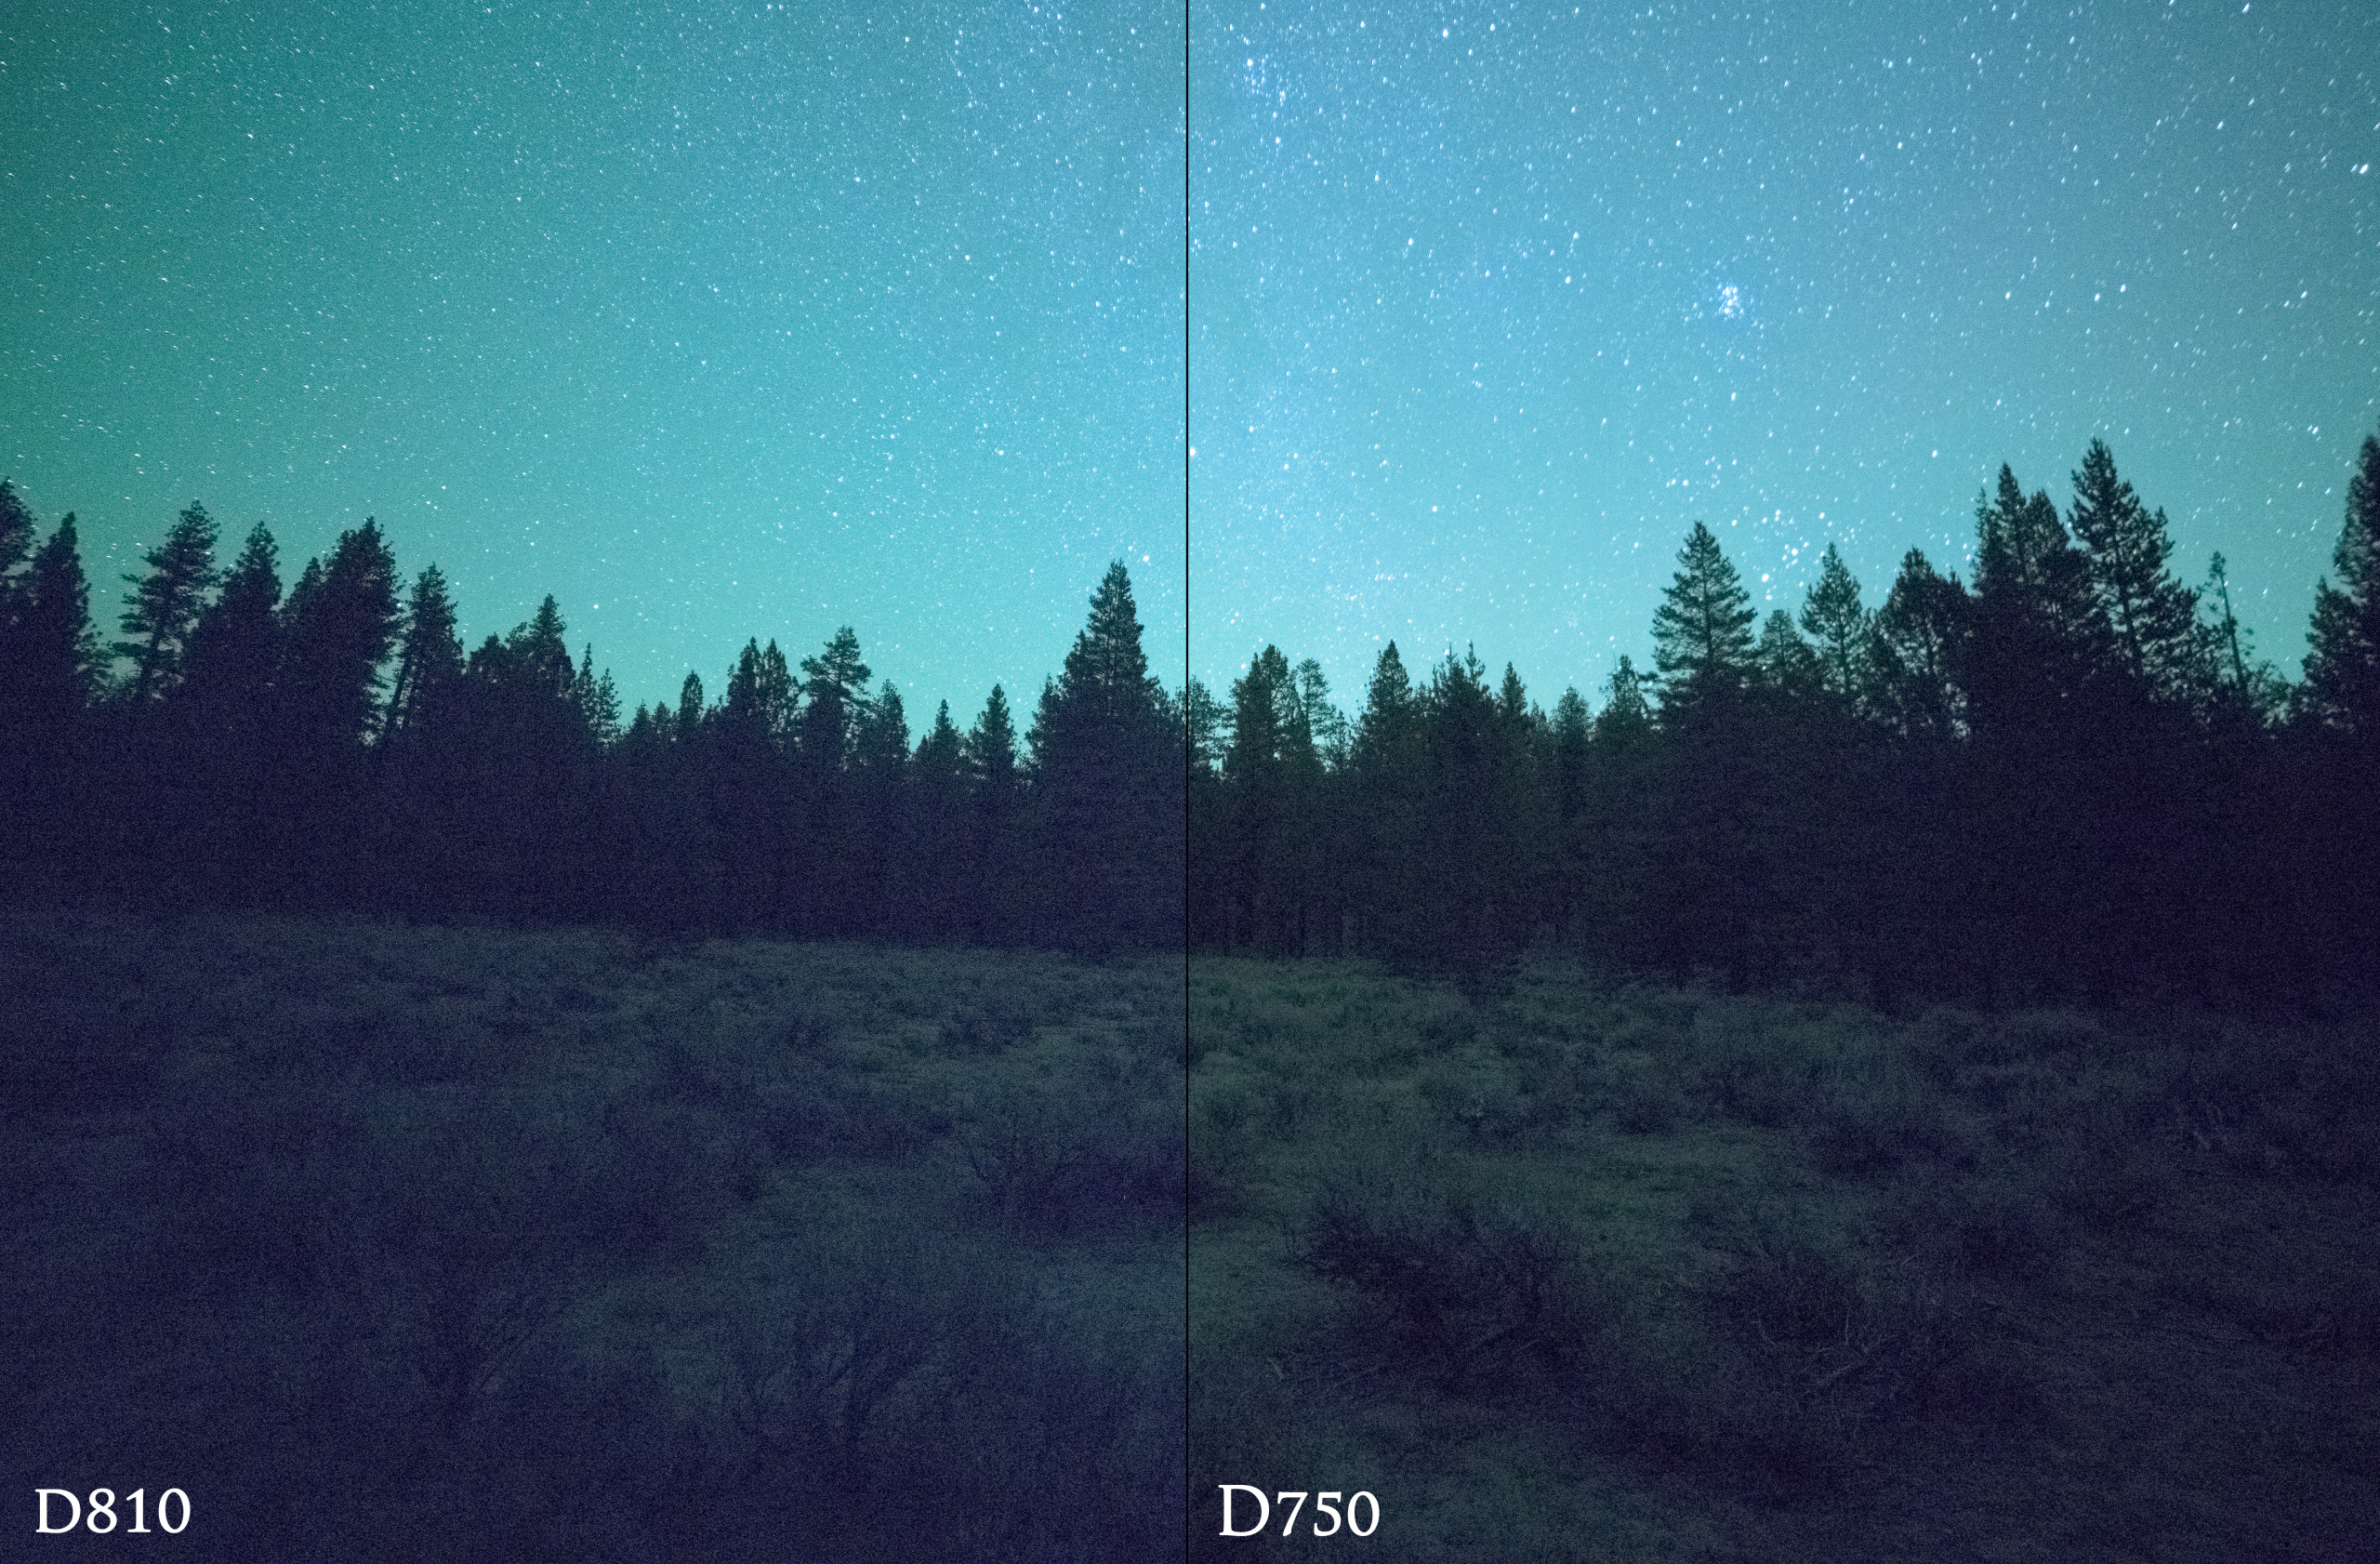 Nikon D750 v sD810 high ISO comparison